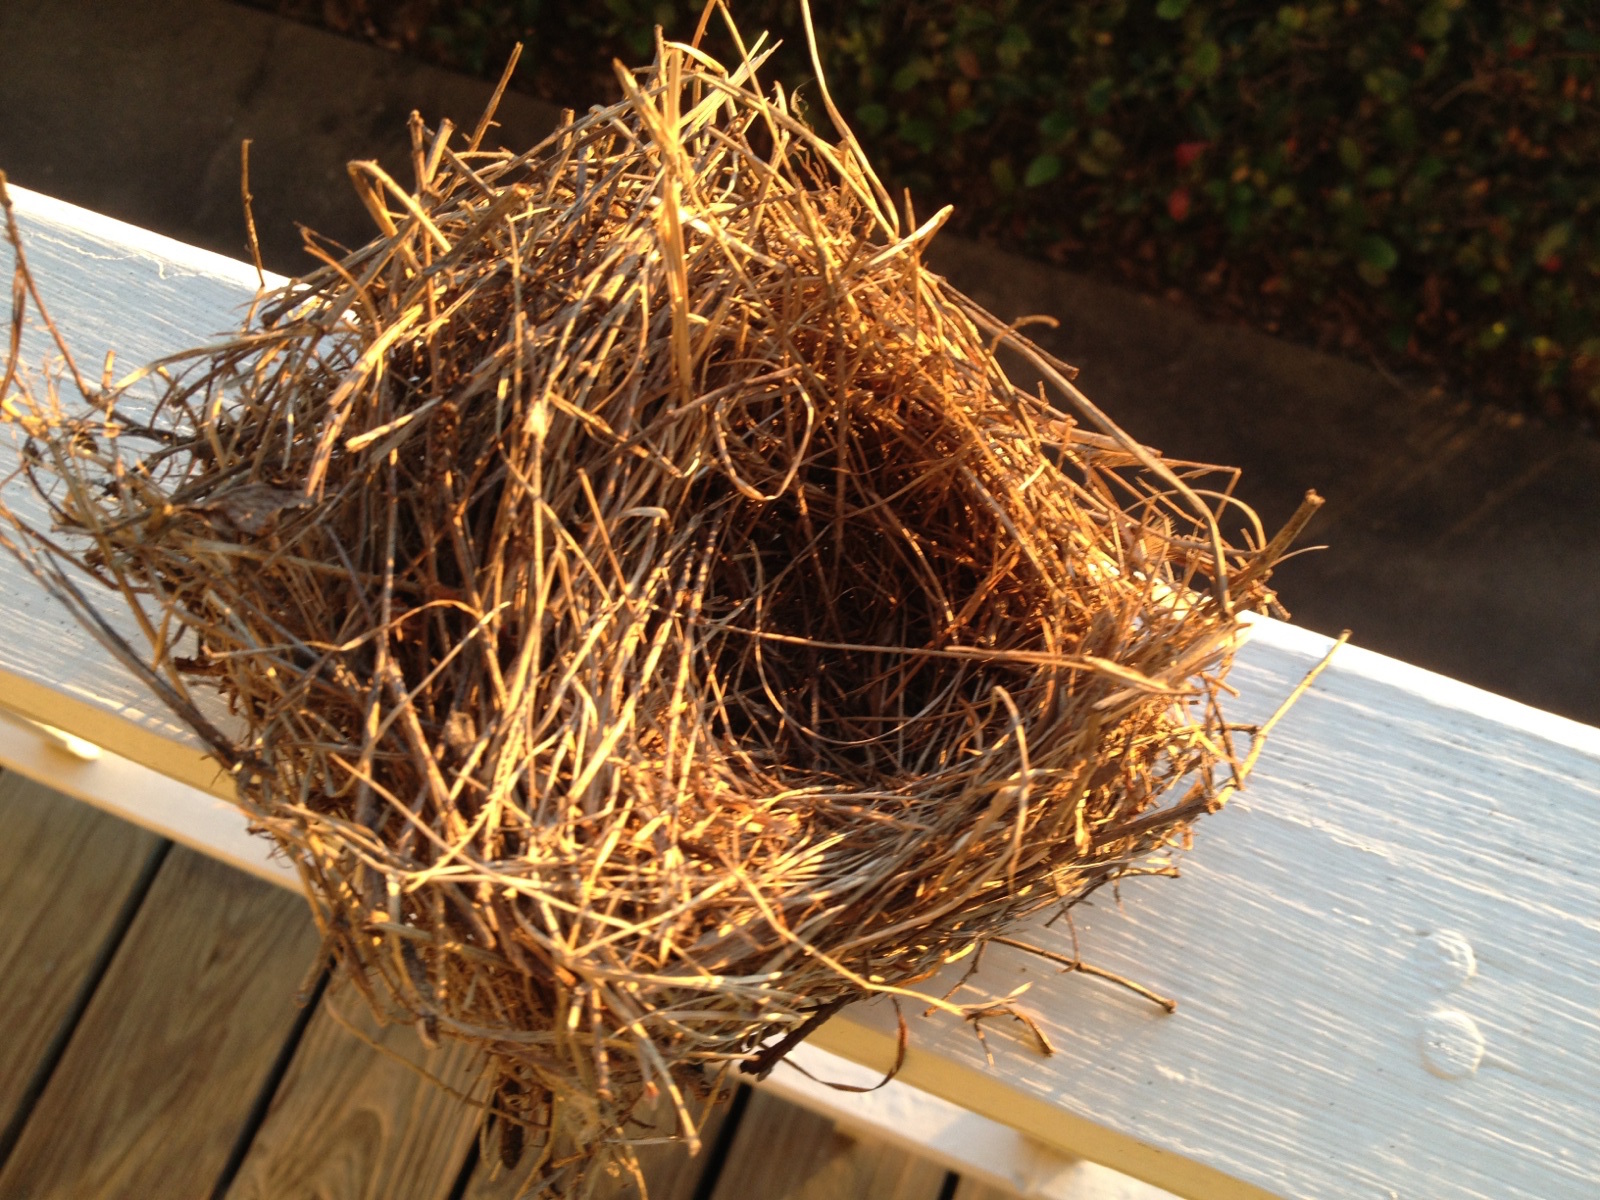 Bird nest 2